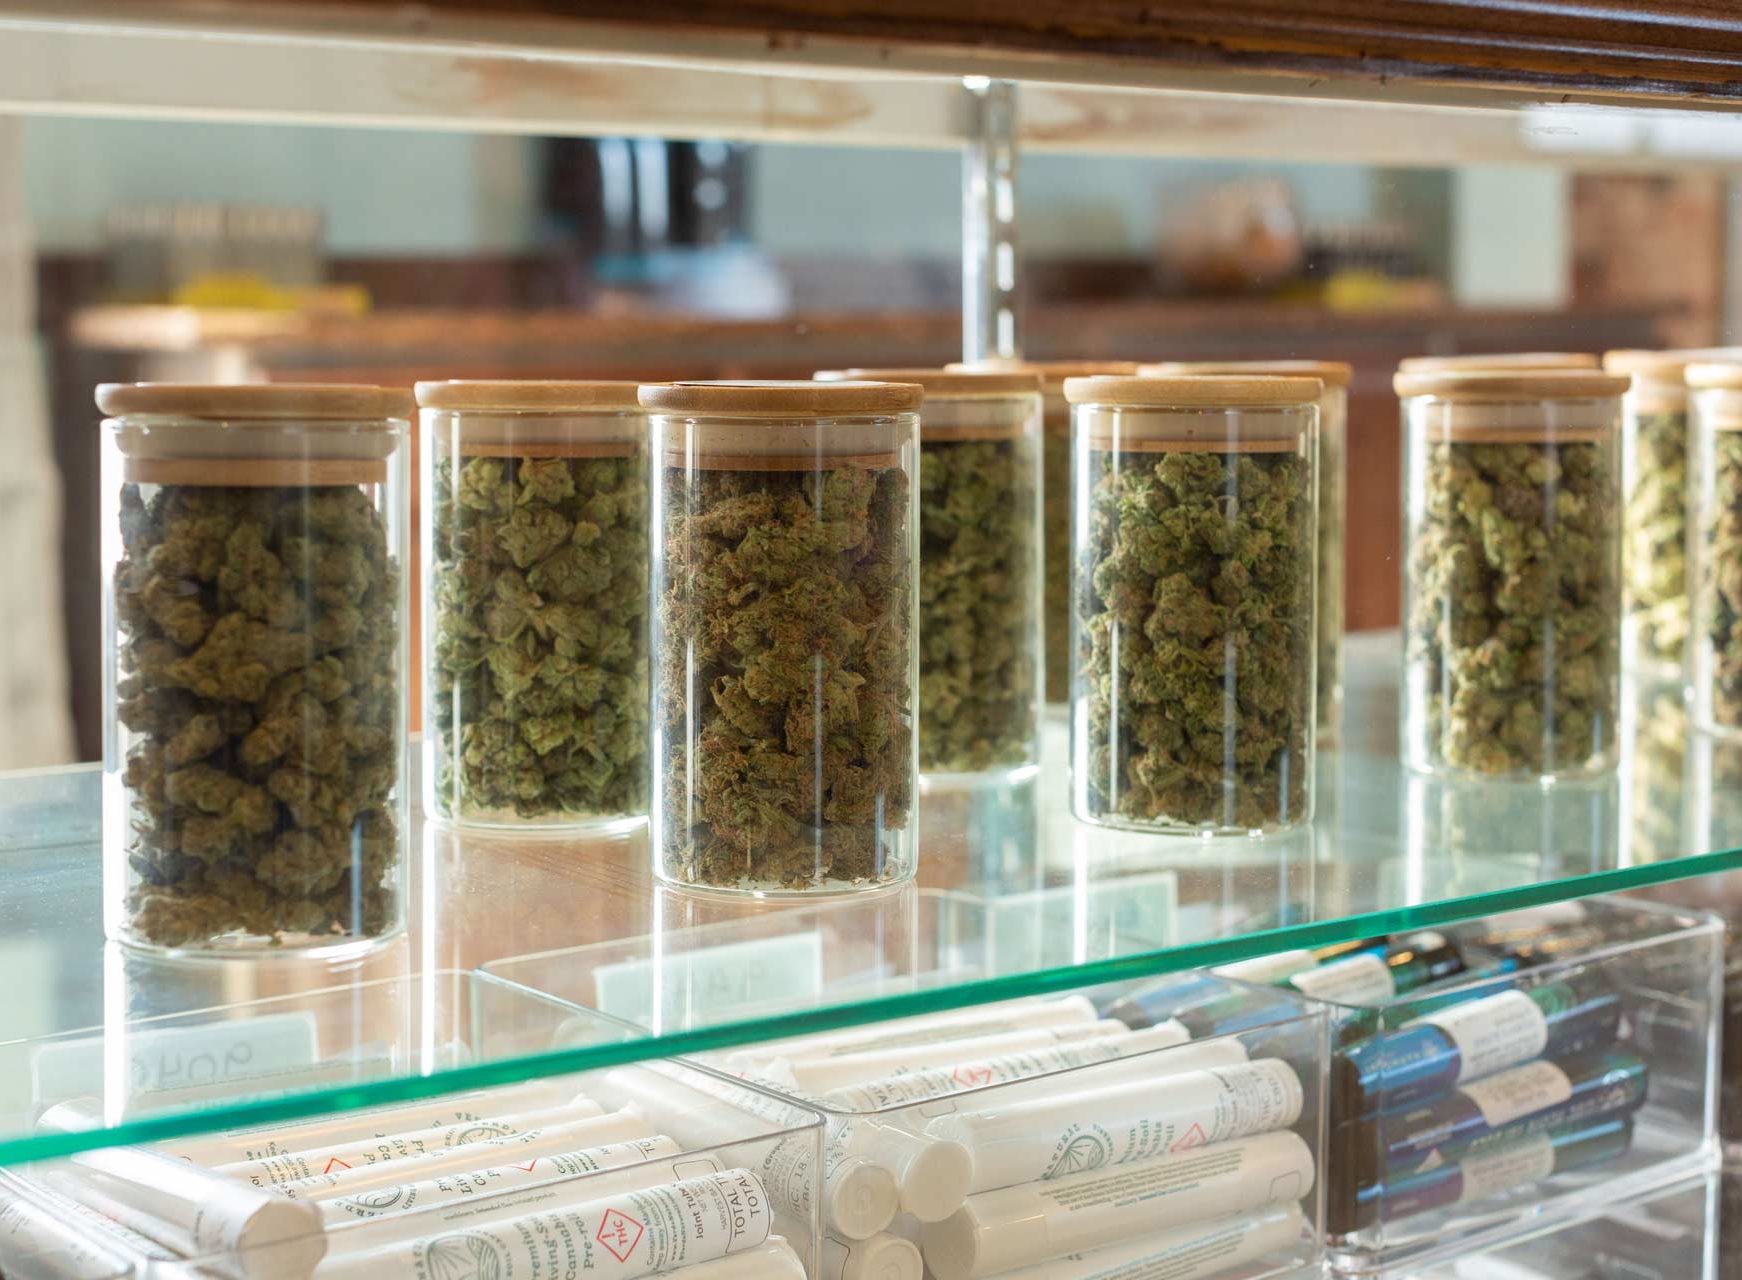 Cannabis Flower in Glass Jars on Shelfs